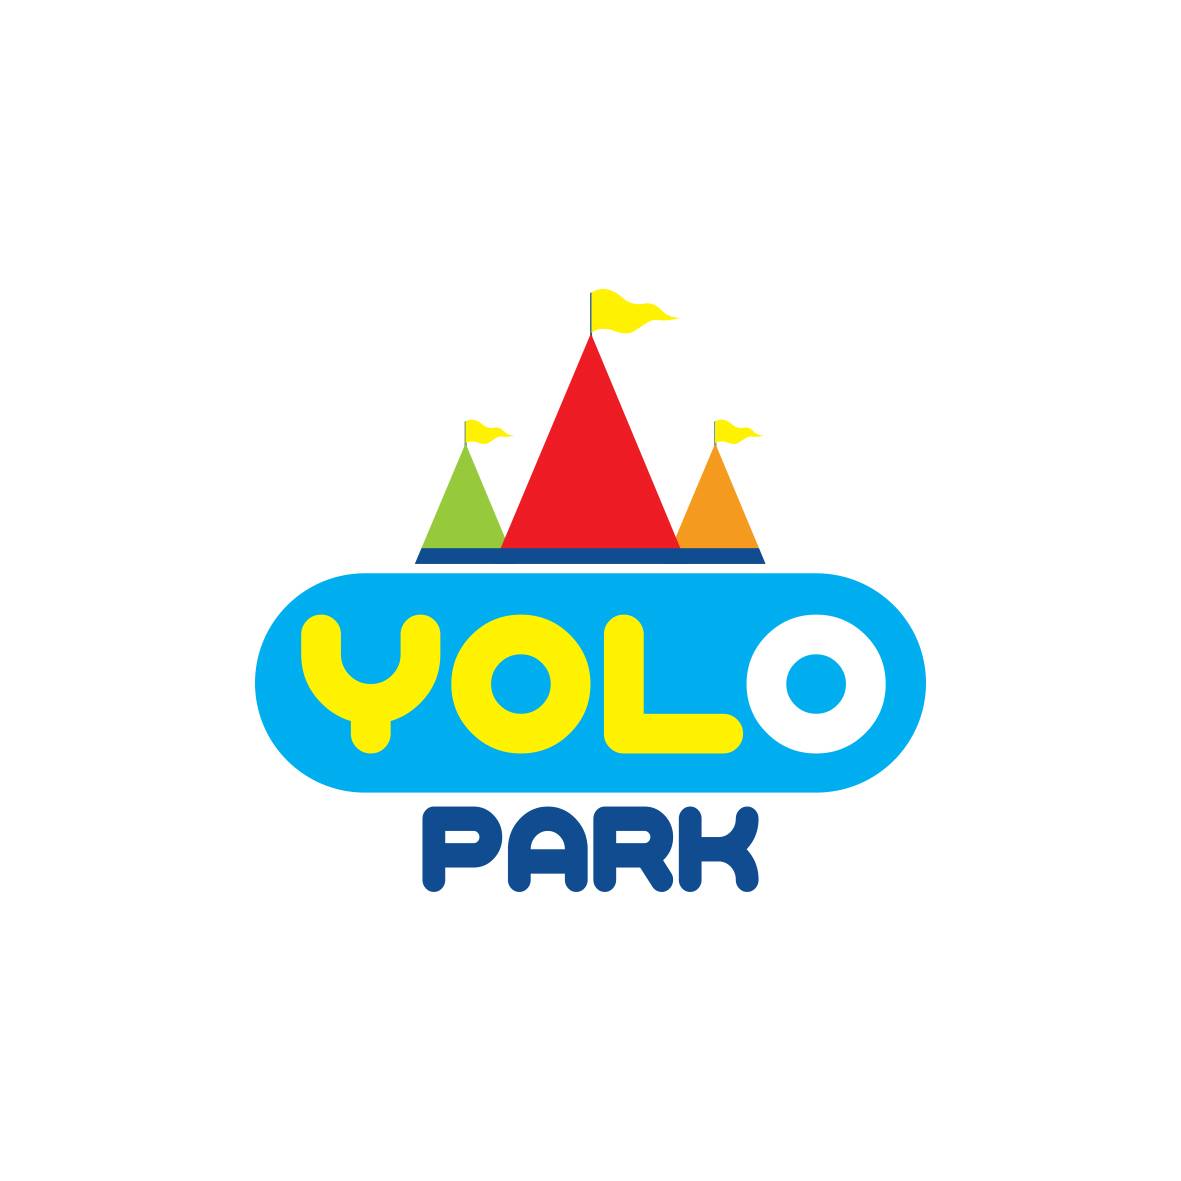 Yolo Park